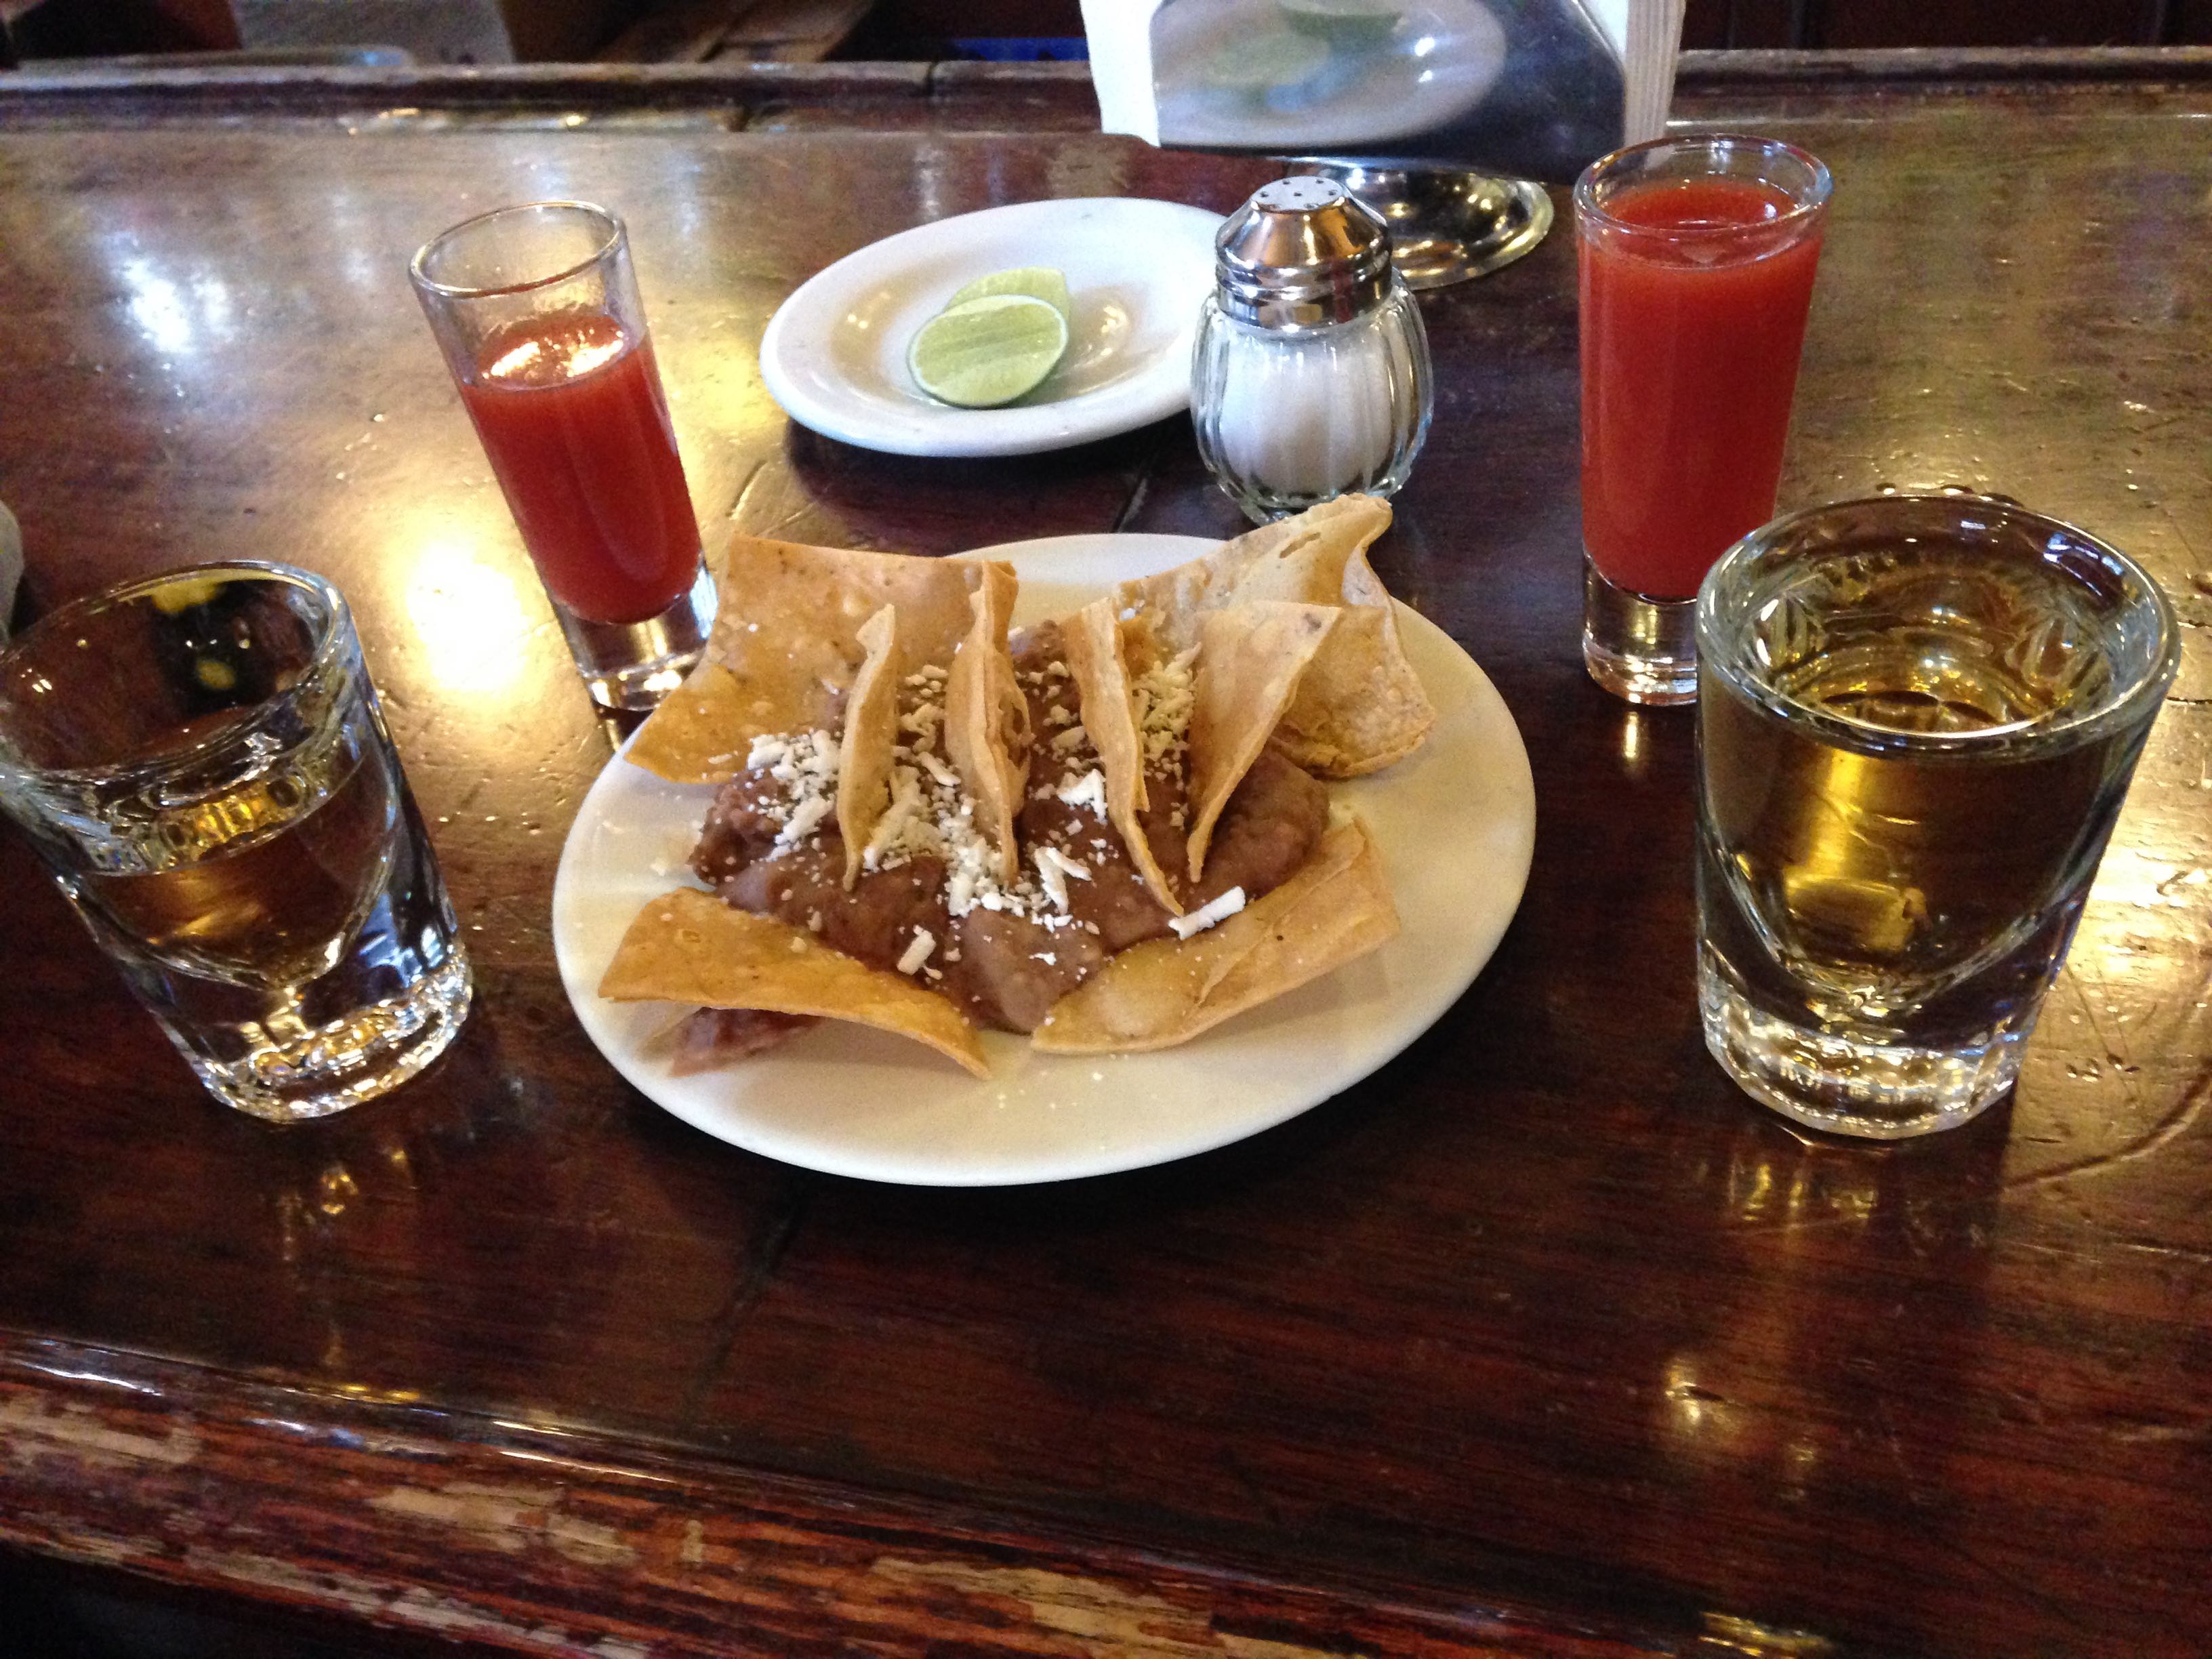 Tostadas, Tortillas, Tequila: Tastes of Mexico